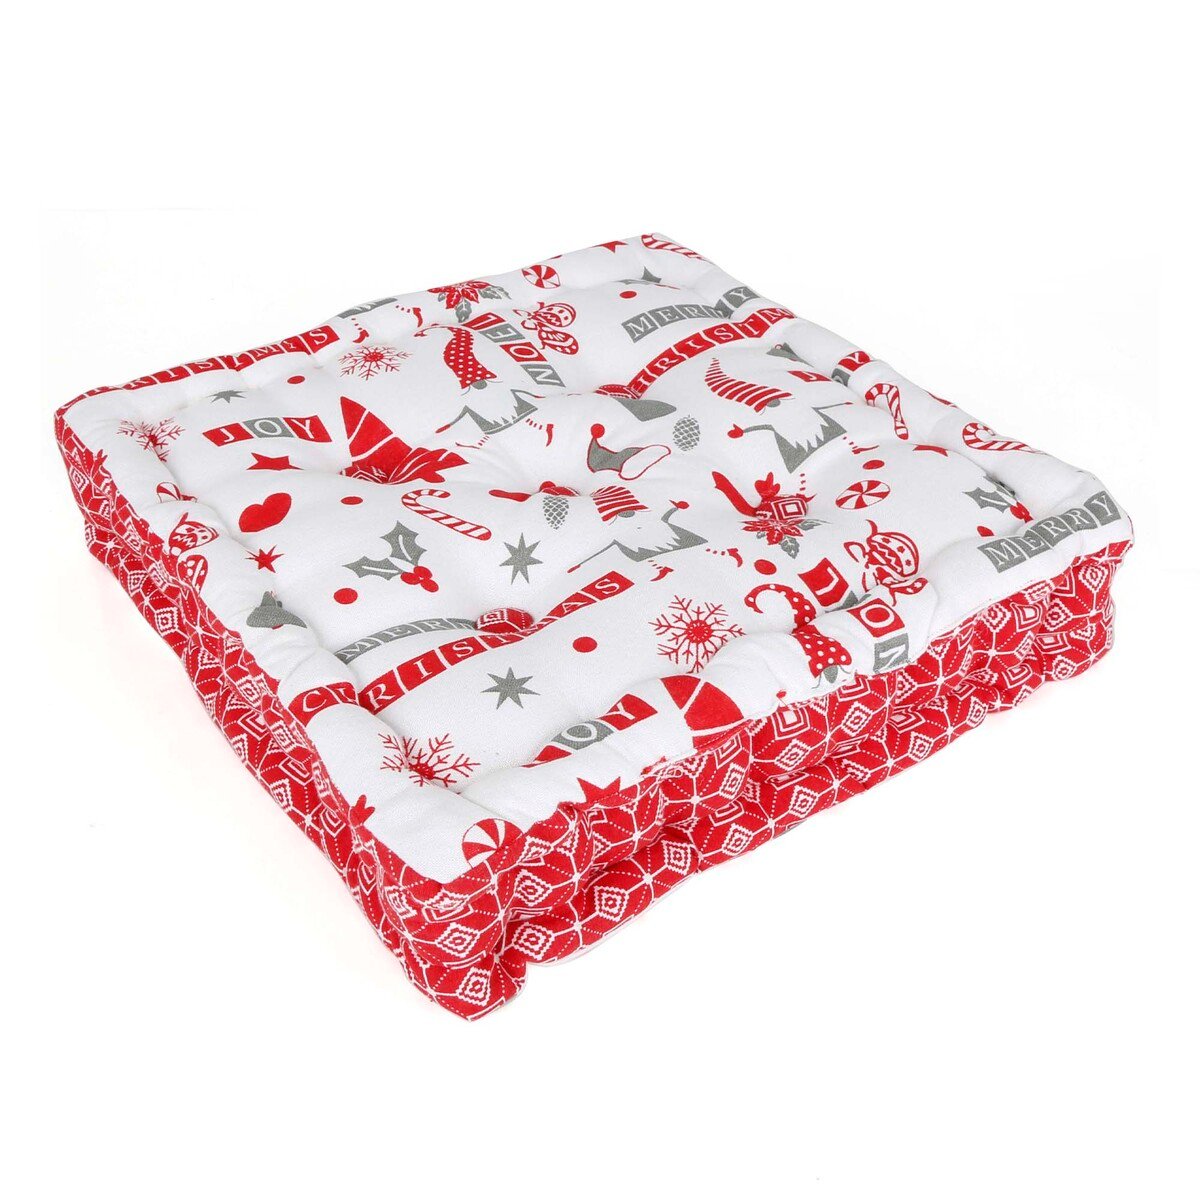 Homewell "Merry Christmas" Box Cushion 40x40cm Assorted